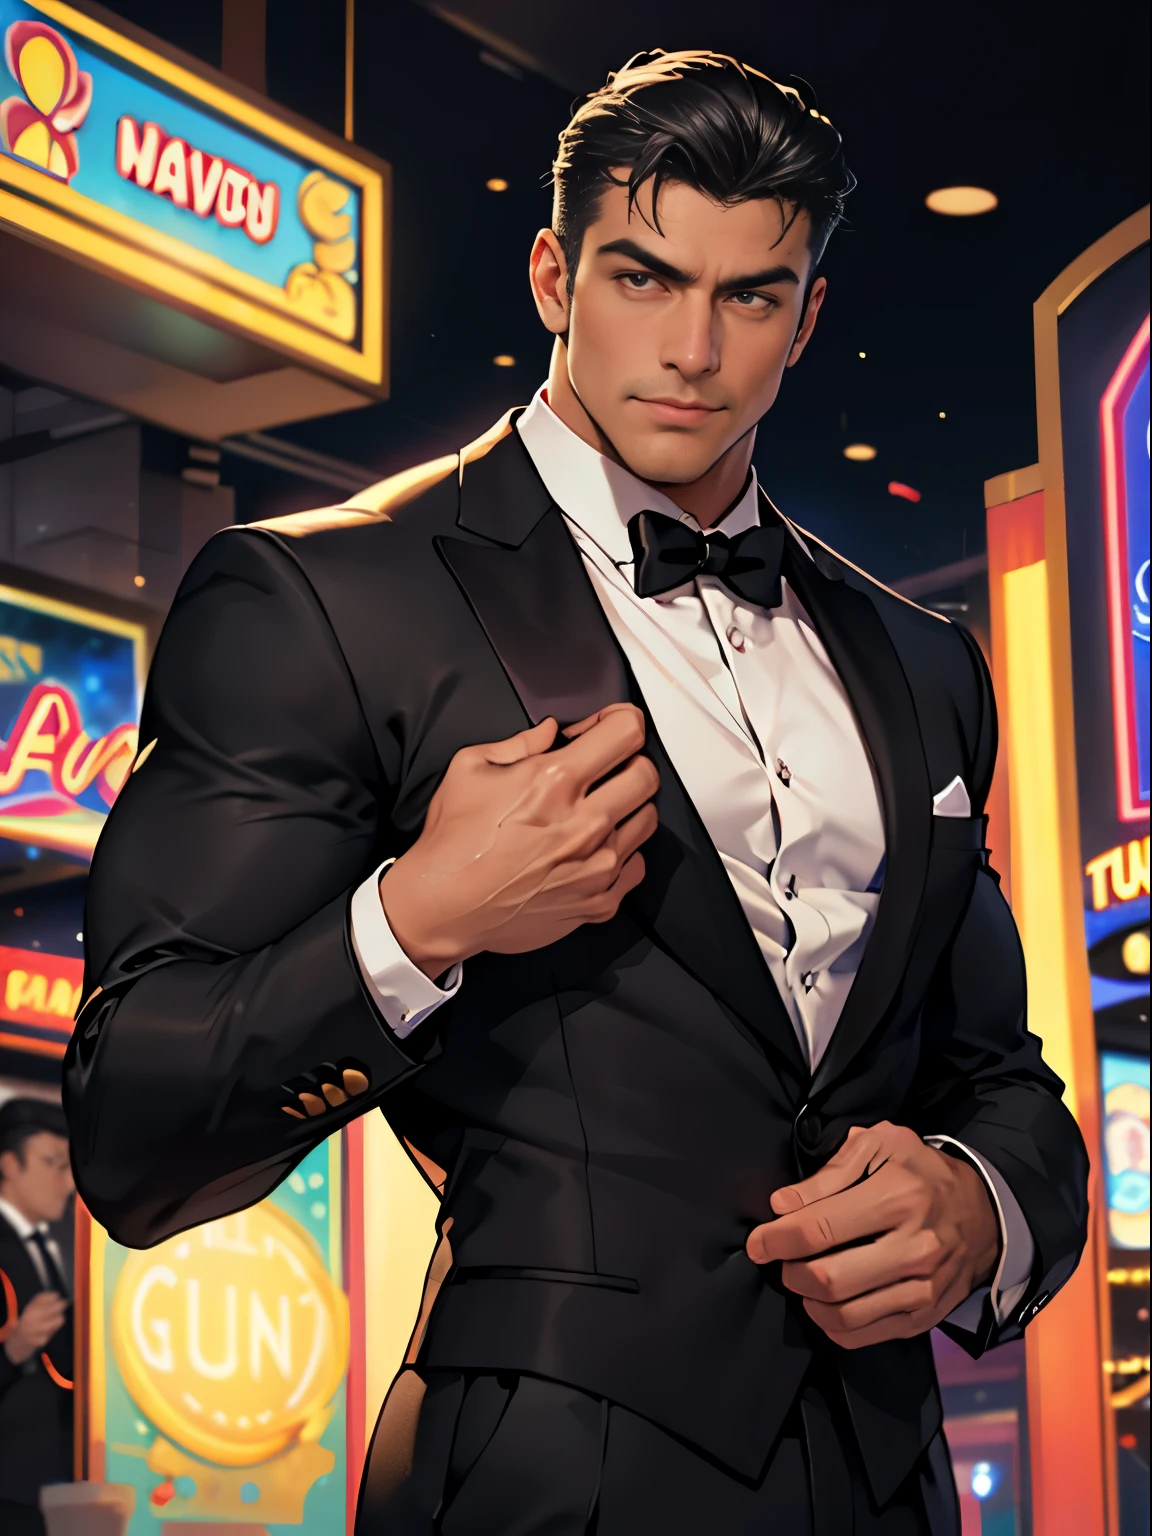 suave secret agent, muscular man, hunk, charming, attractive, black tuxedo, luxury casino background, mysterious aura, volumetric lighting, depth of field, best quality